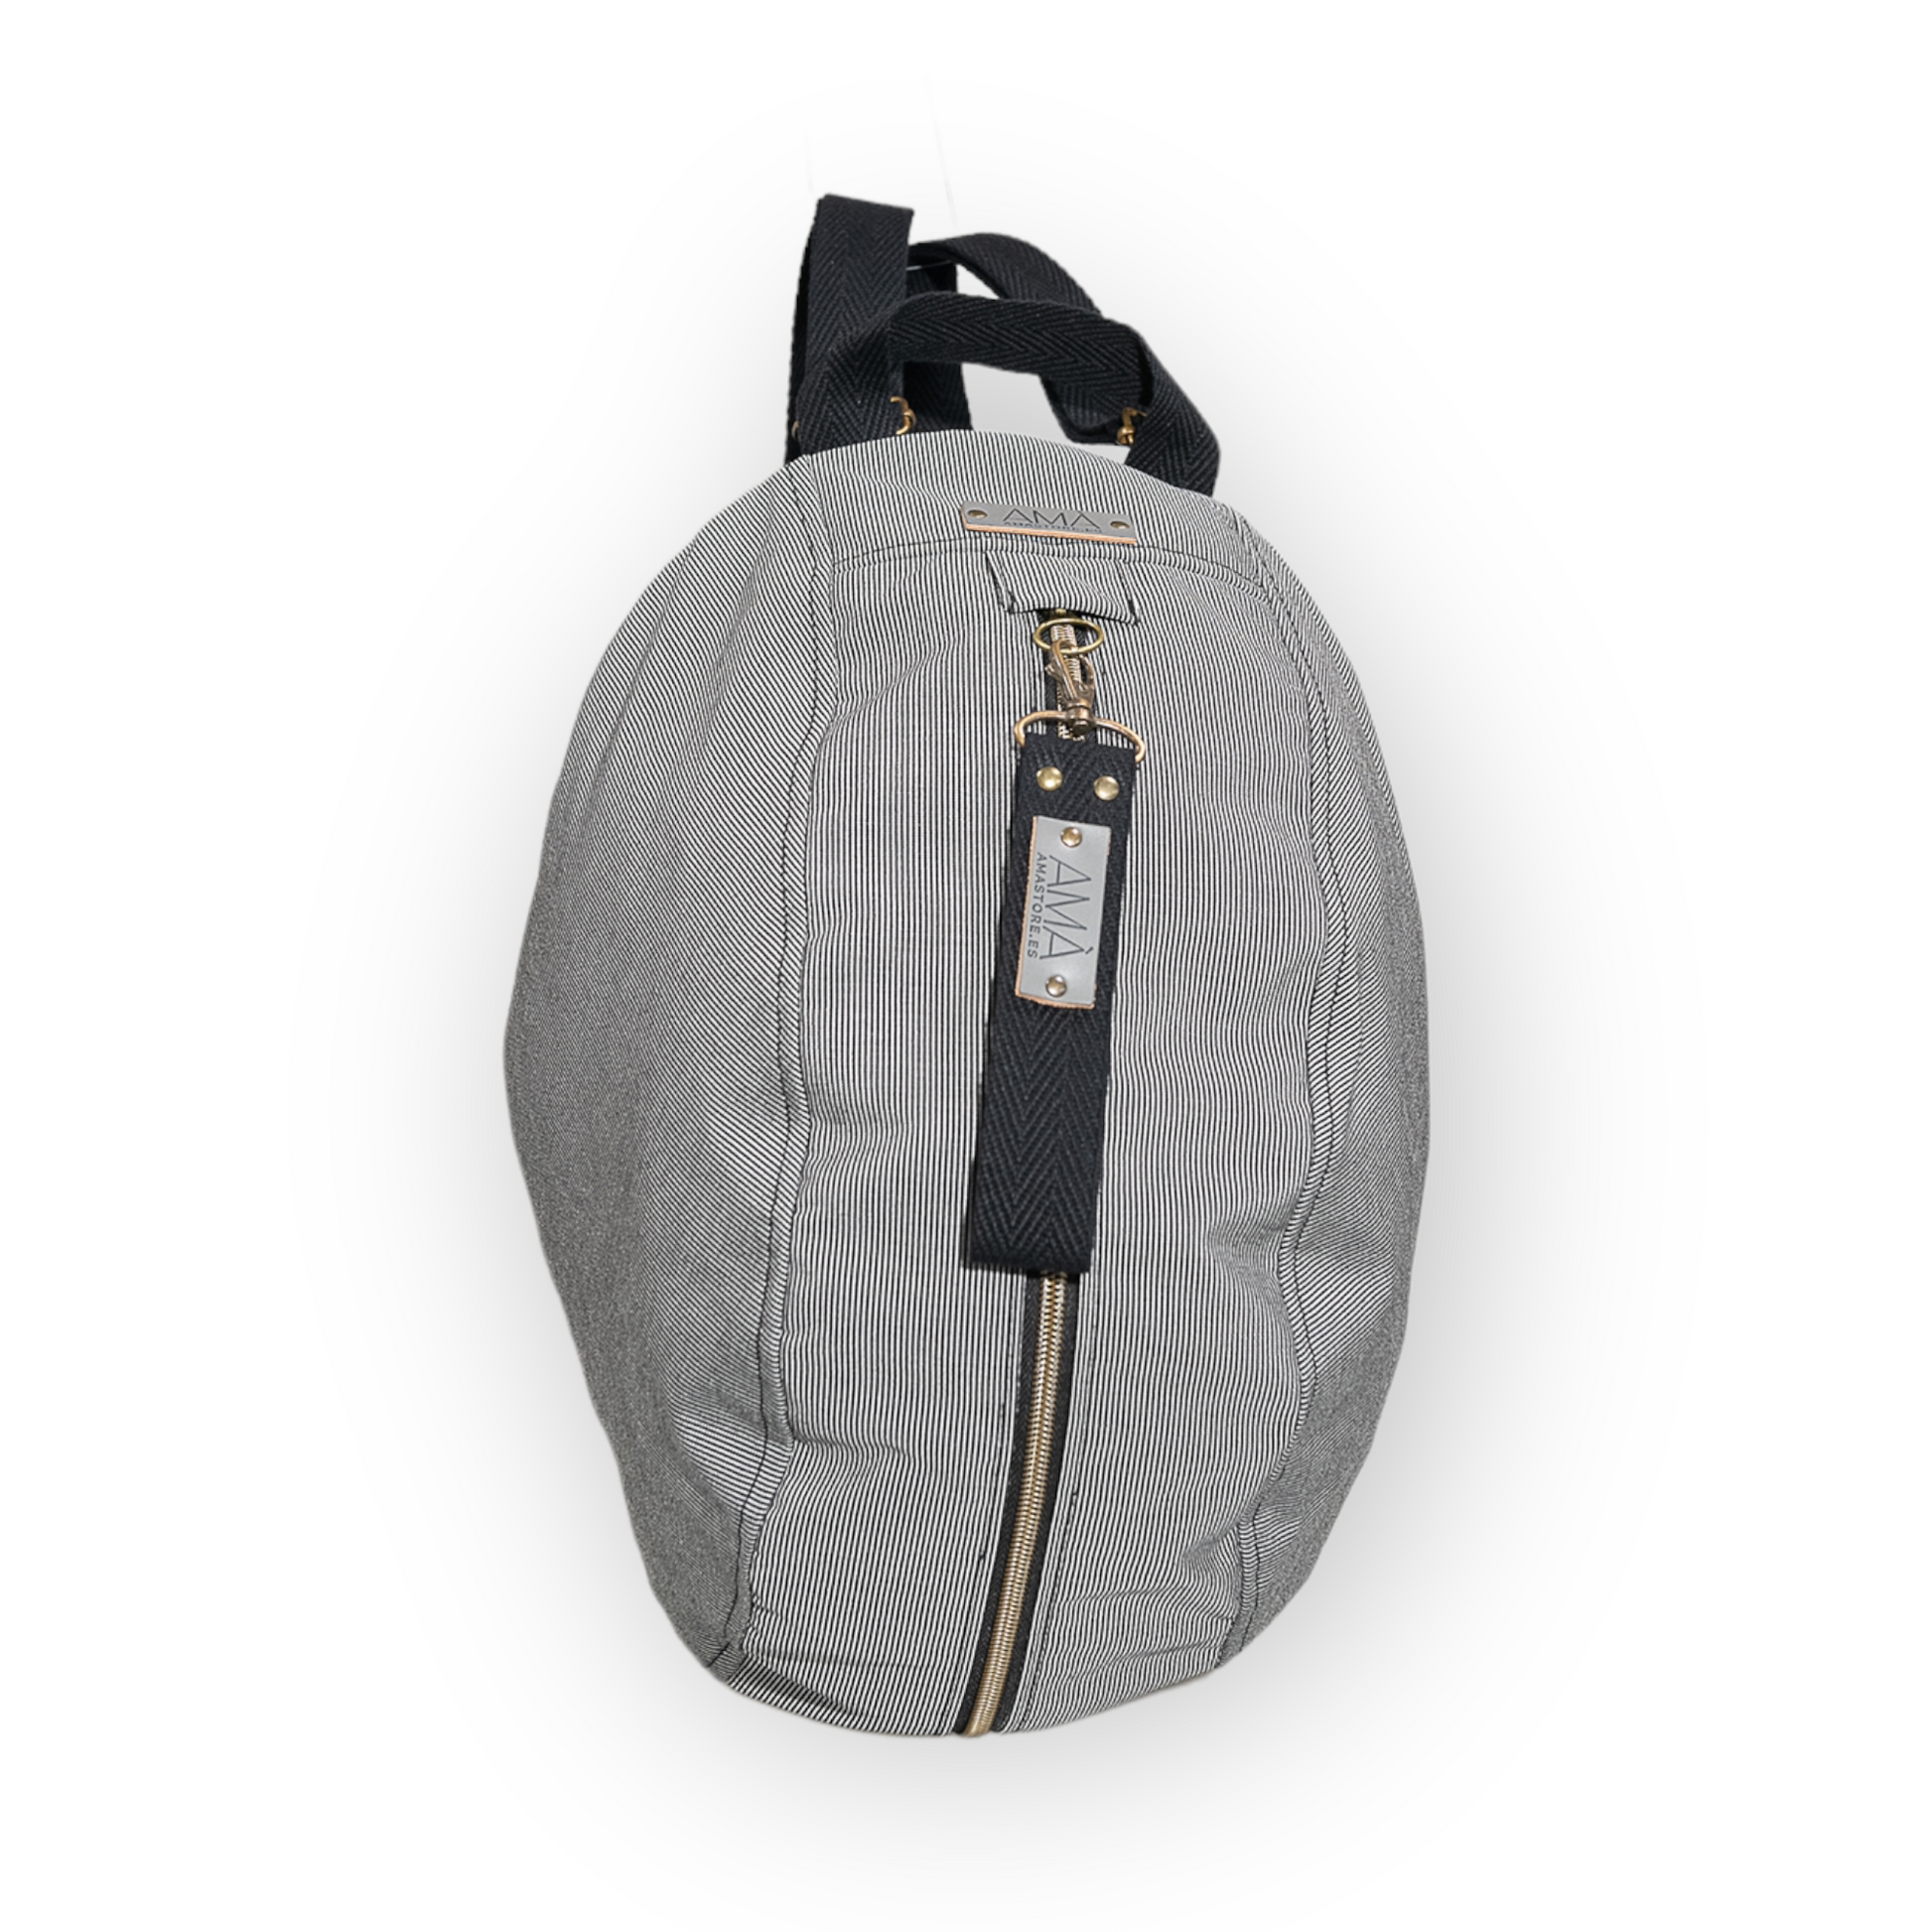 Mochila/Bolsa para casco impermeable - Negra y blanca a rayas - 59,90€ –